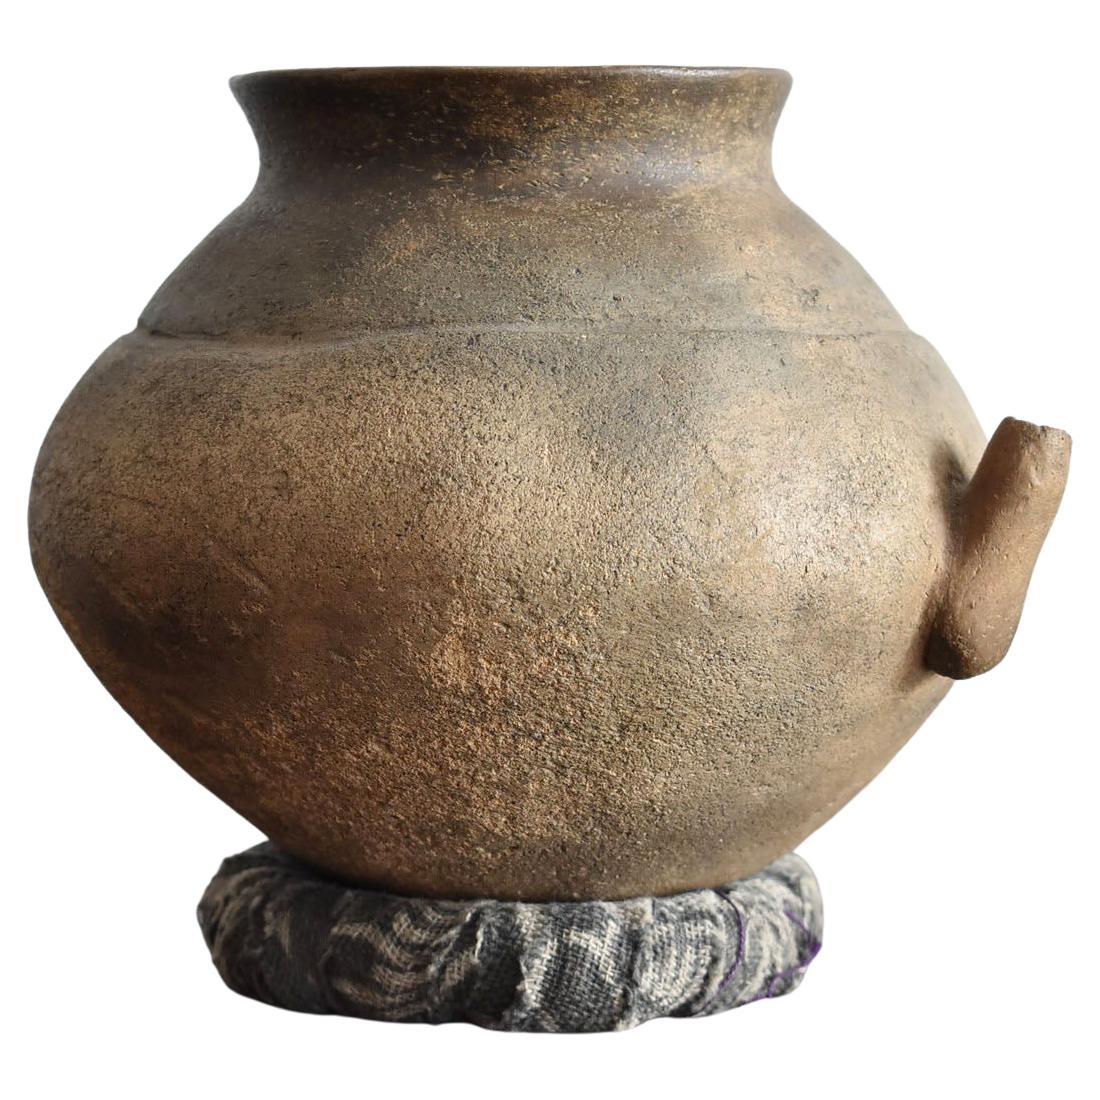 Japanese Ancient Small Jar / Jomon Pottery / 3000 Years ago / Wabi-Sabi